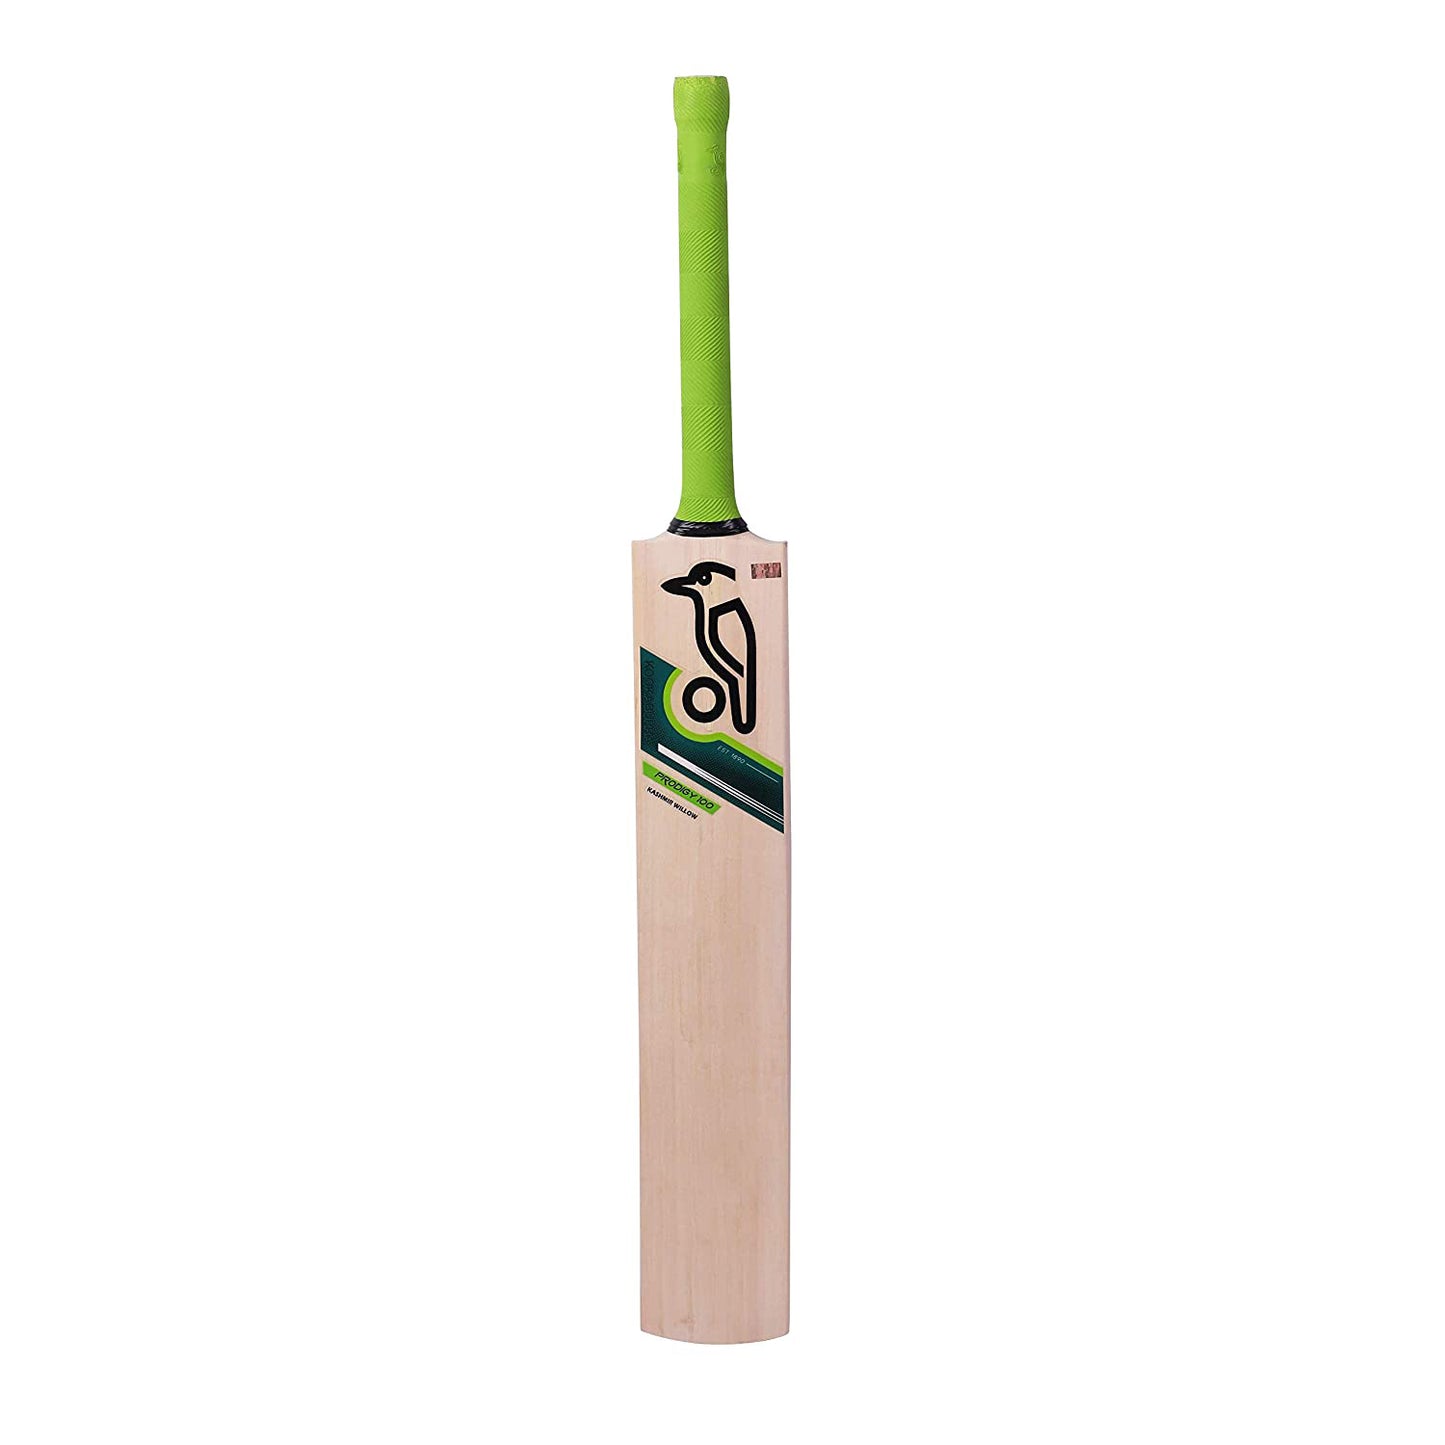 Kookaburra Kahuna Prodigy 100 Kashmir Willow Cricket Bat - Best Price online Prokicksports.com